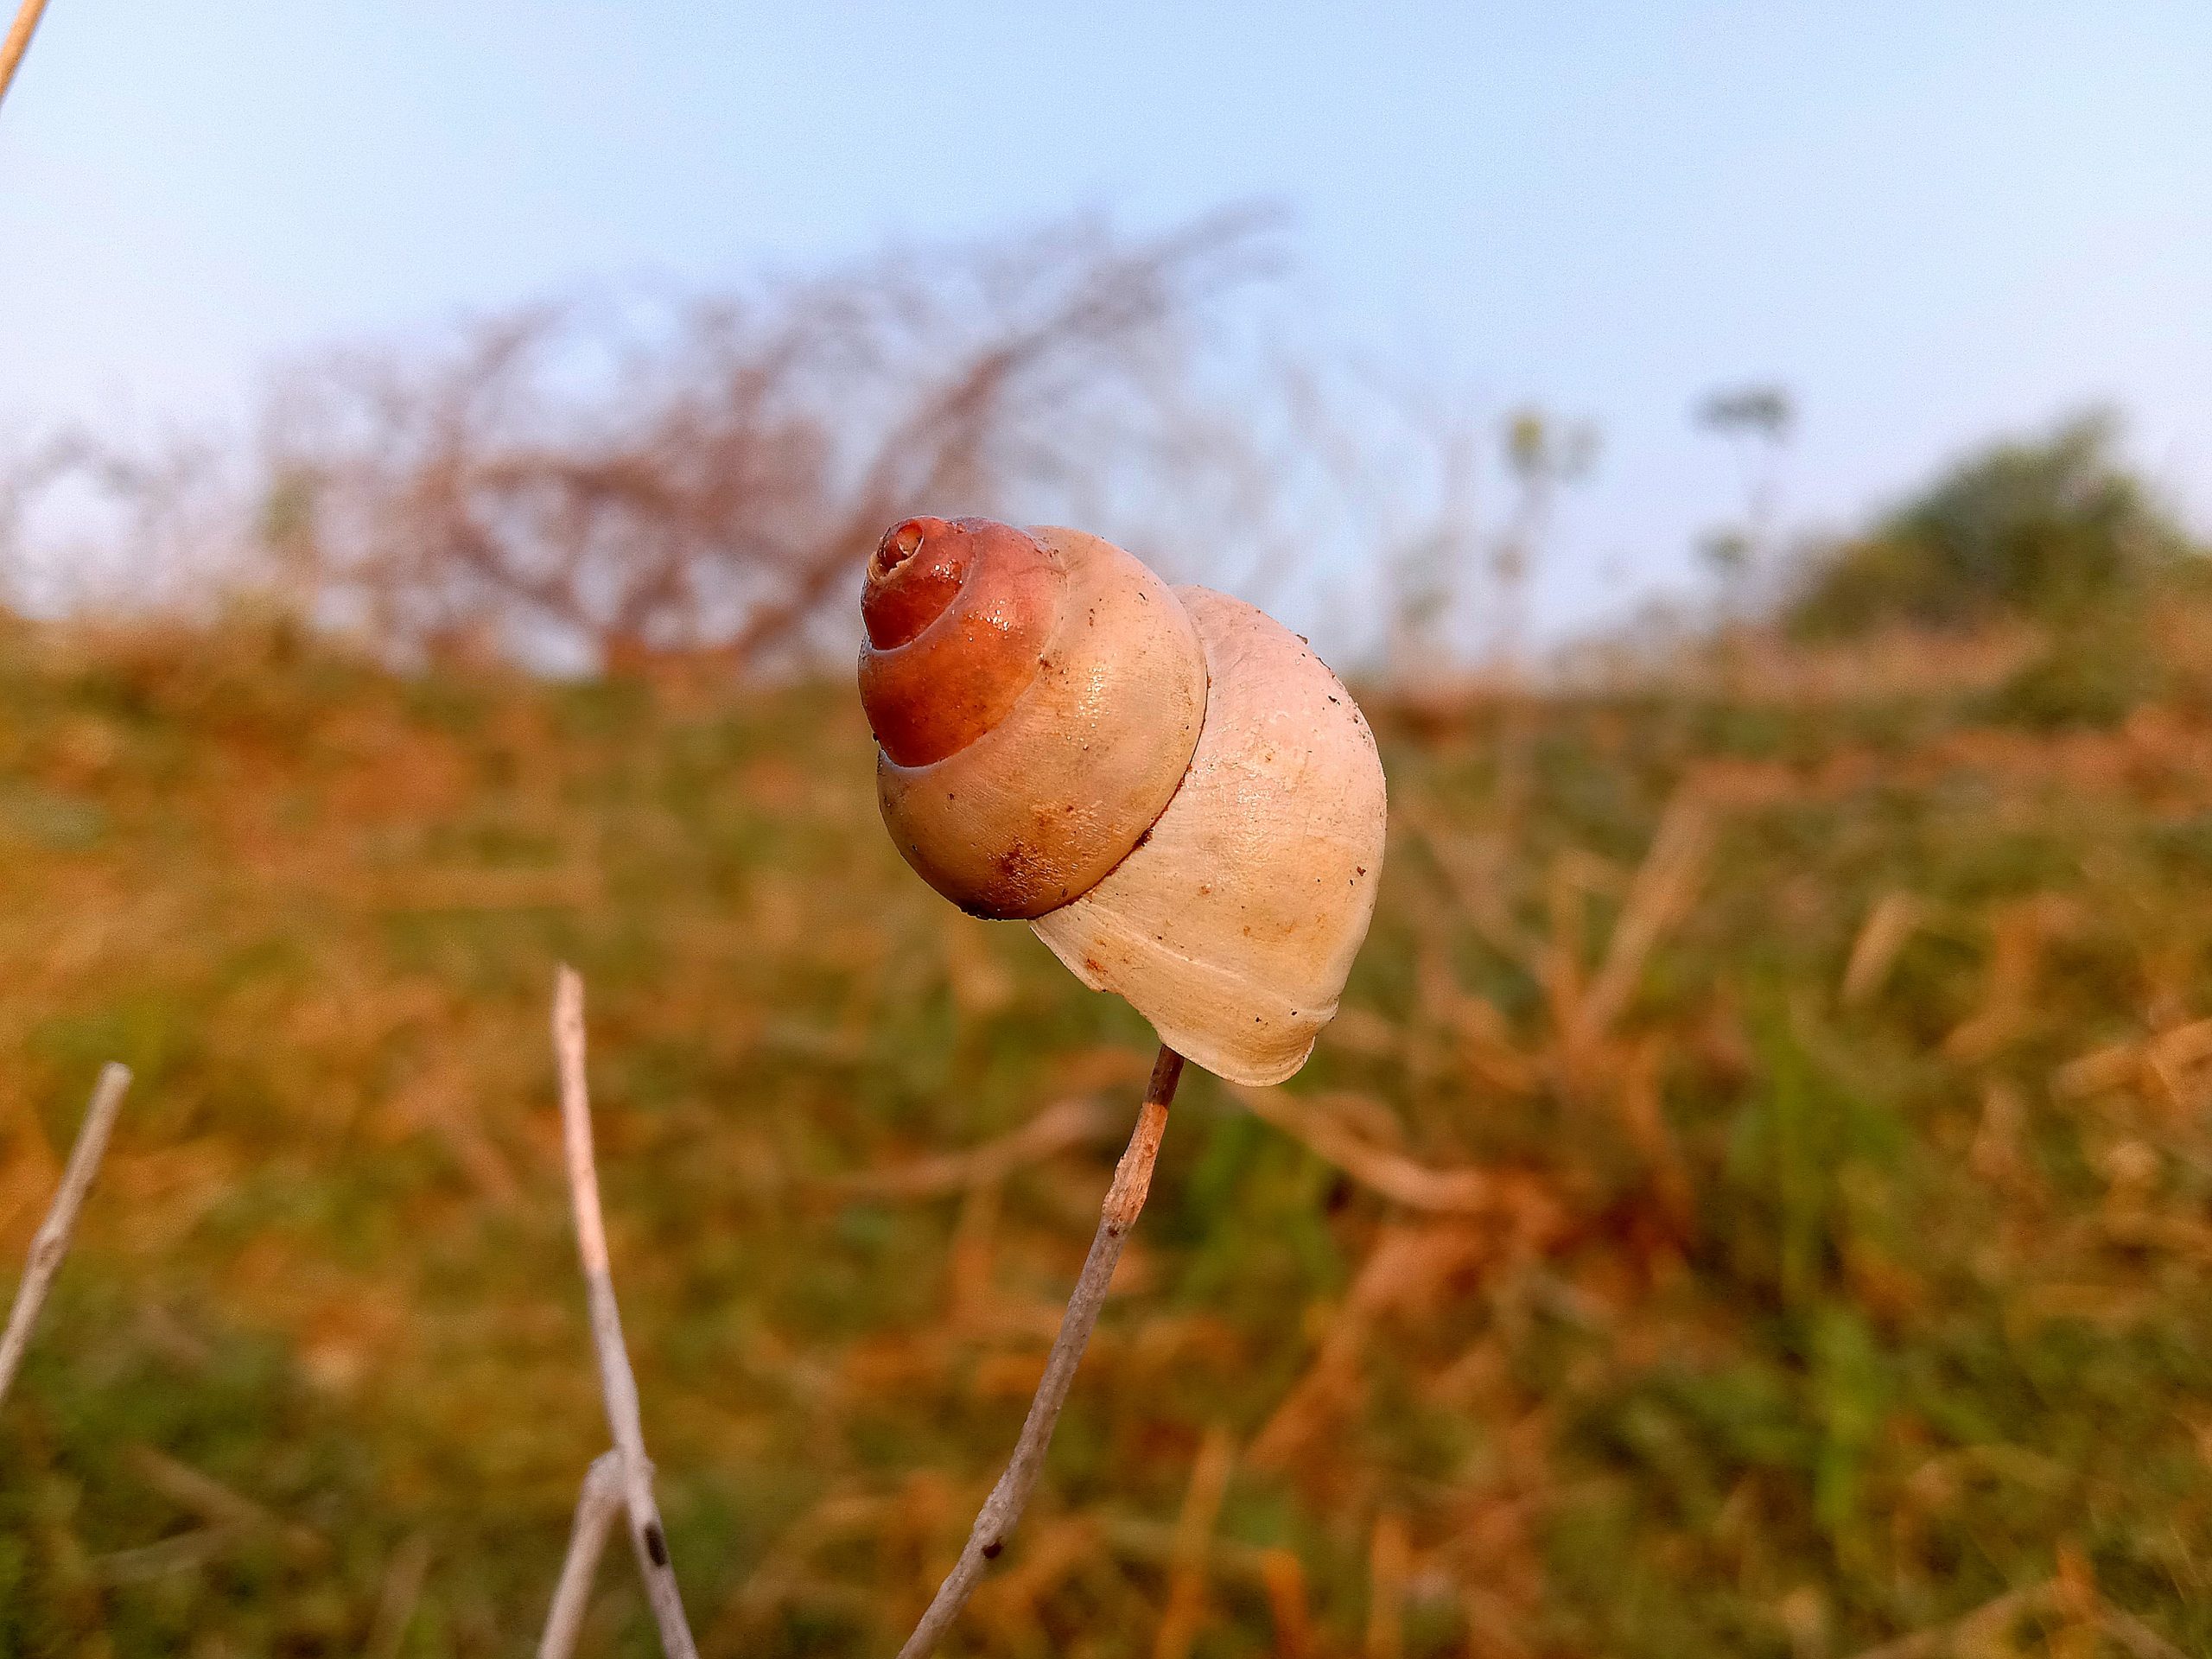 A seashell on a twig